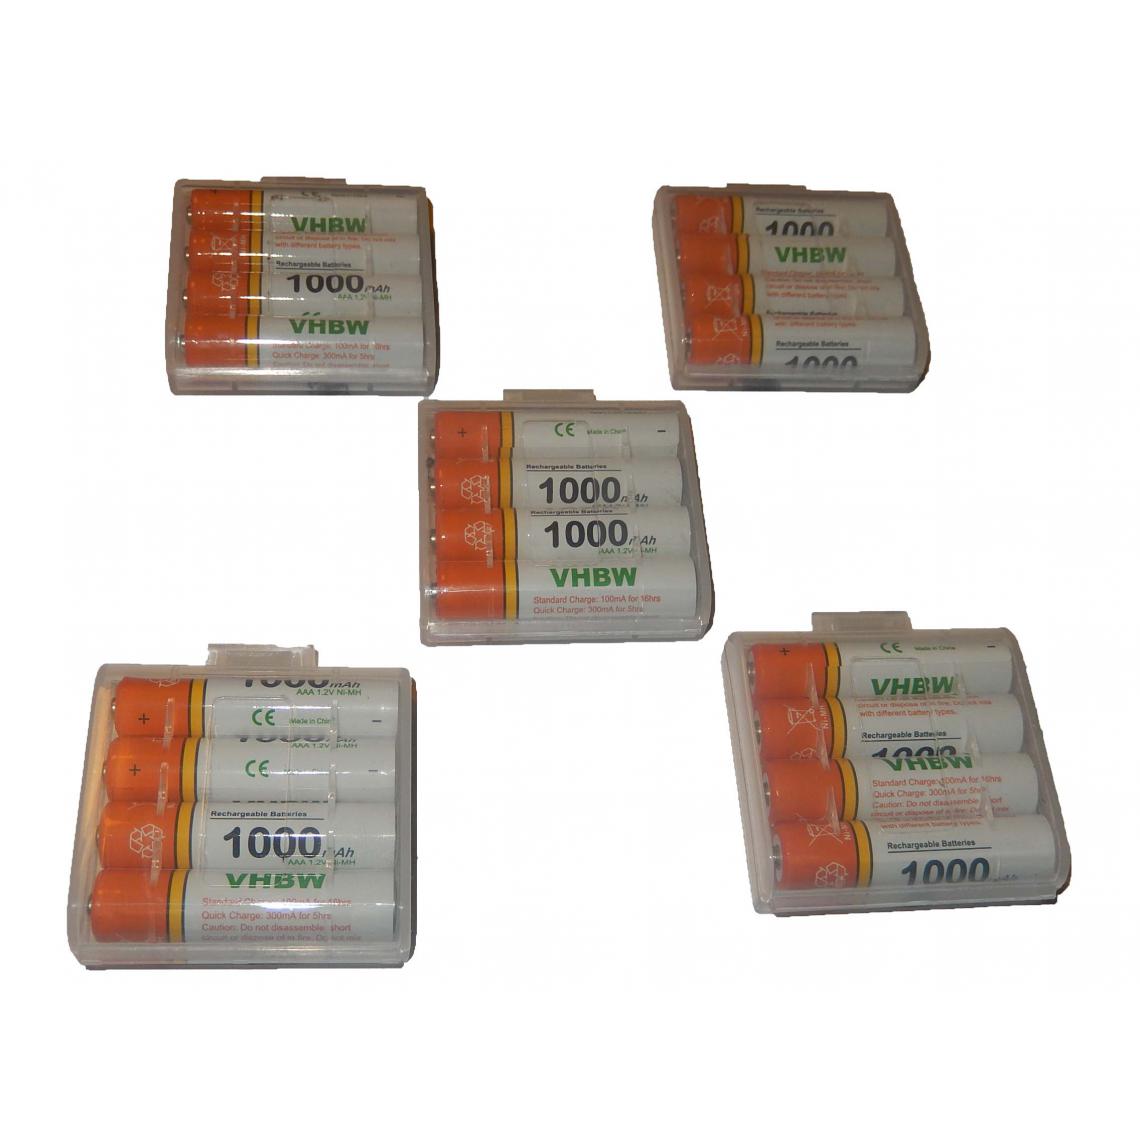 Vhbw - Lot 20 piles rechargeables vhbw AAA, Micro, R3, HR03 1000mAh pour Panasonic KX-TG8051, KX-TG8052, KX-TG8061, KX-TG8062, KX-TG8151,KY-TG8161, KX-TG8551 - Autre appareil de mesure